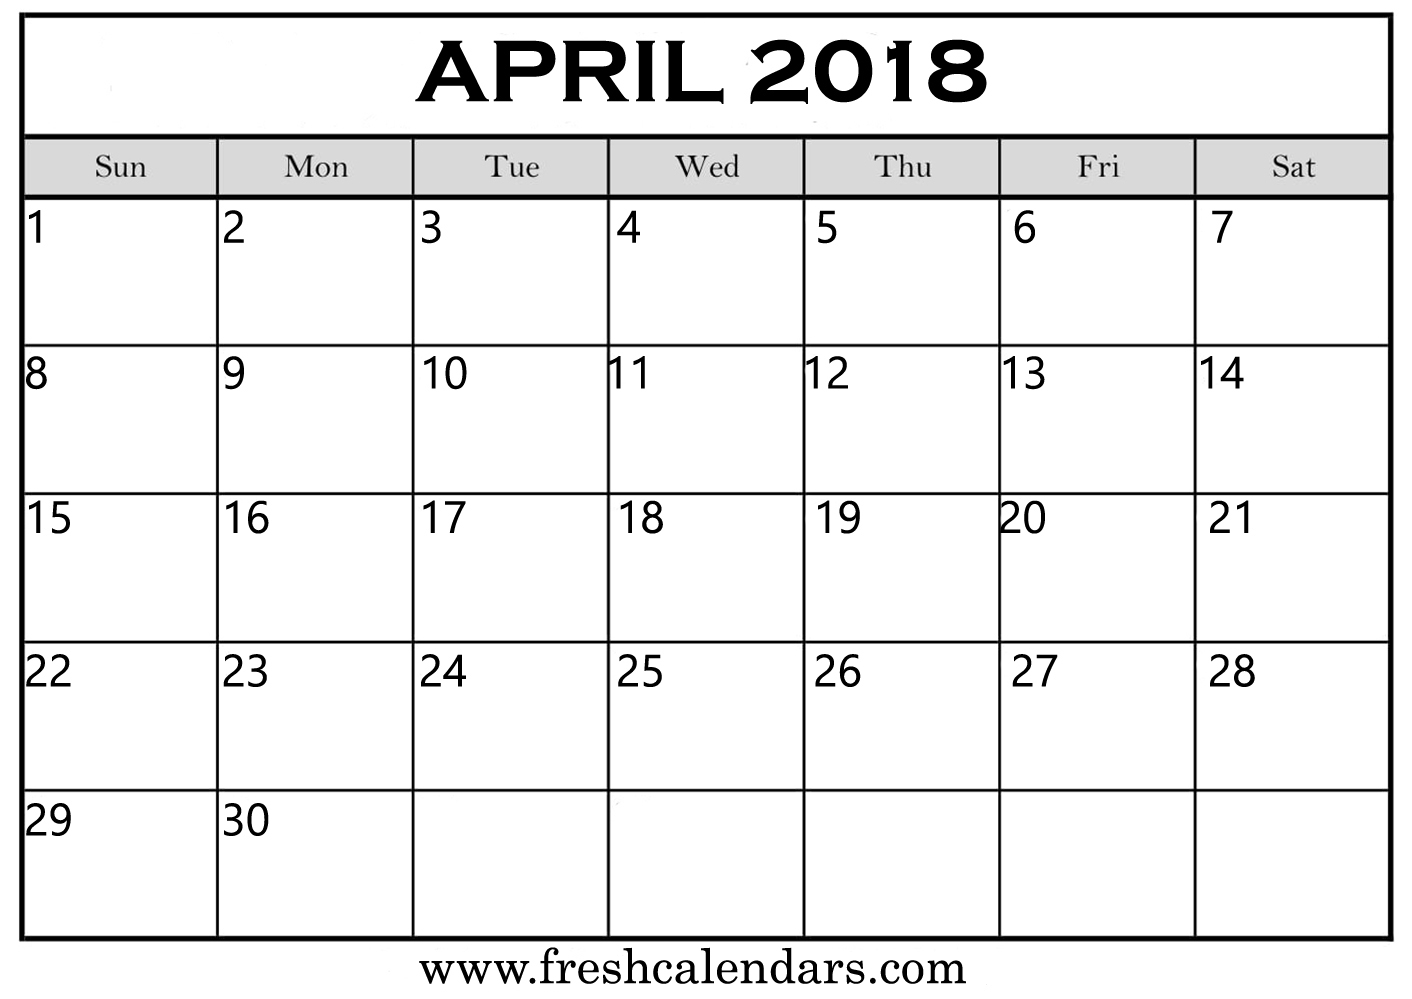 Printable Calendar of April 2018